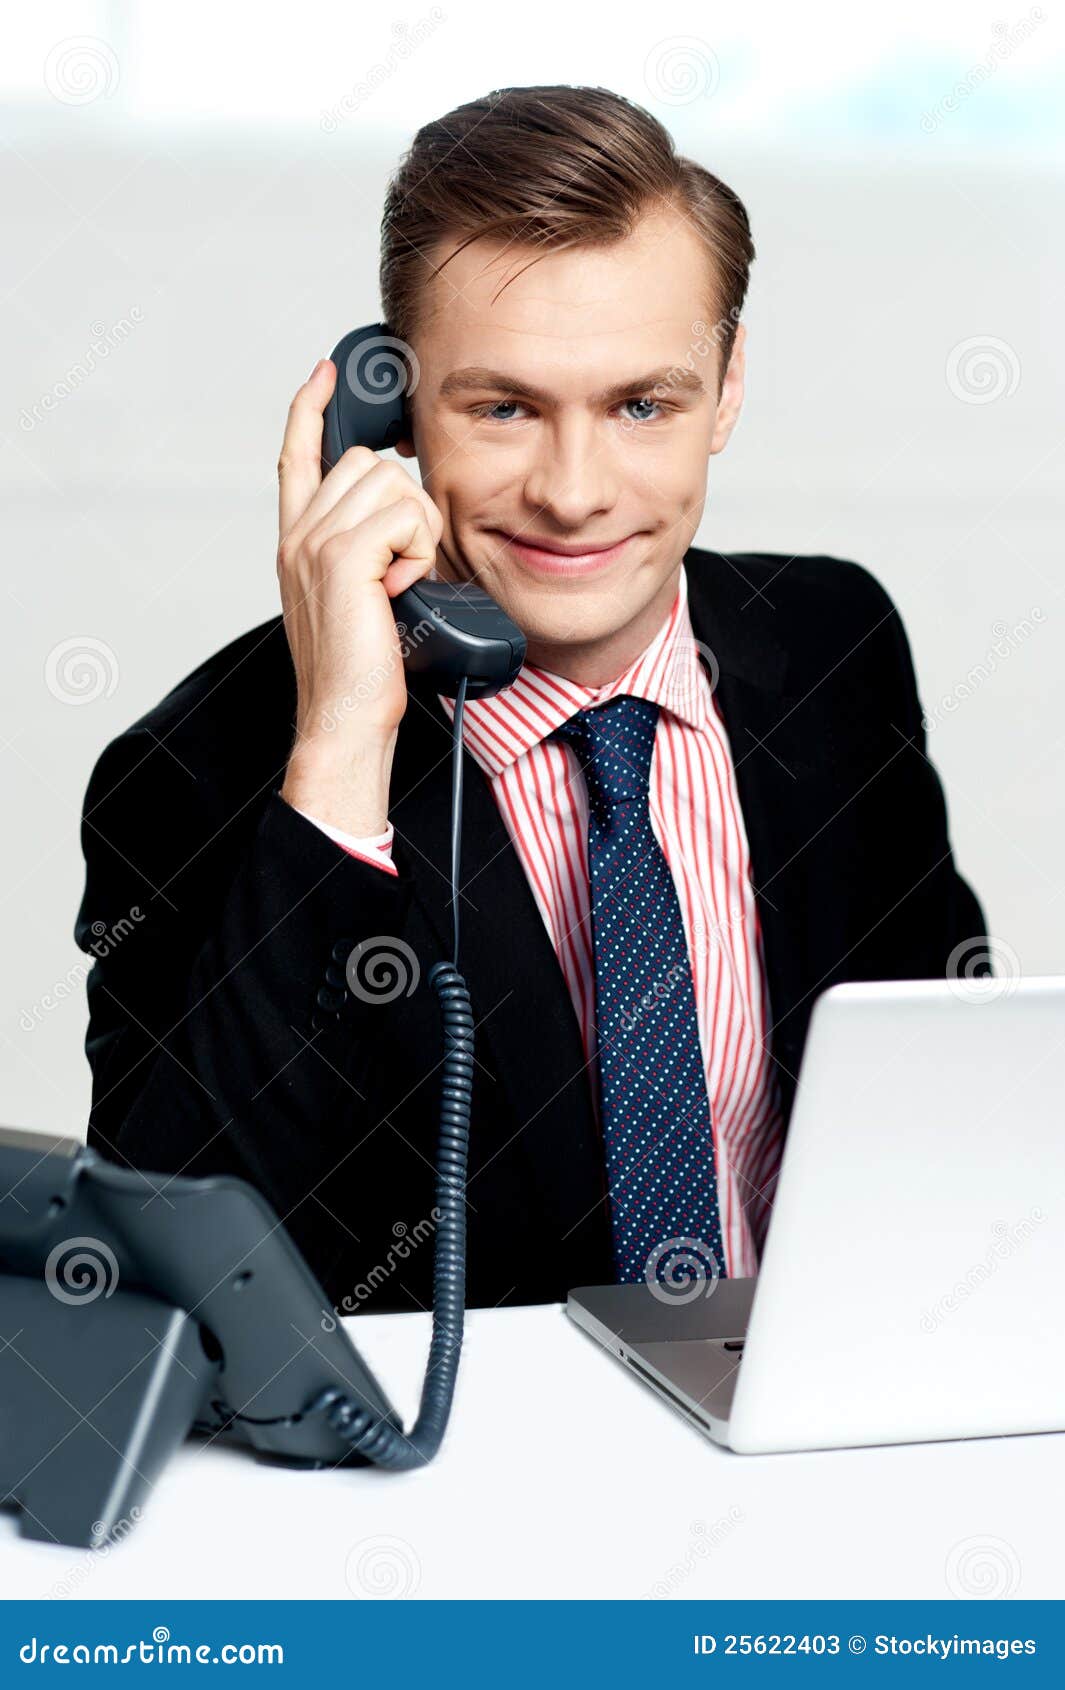 Smart Businessman Communicating on Phone Stock Image - Image of call ...